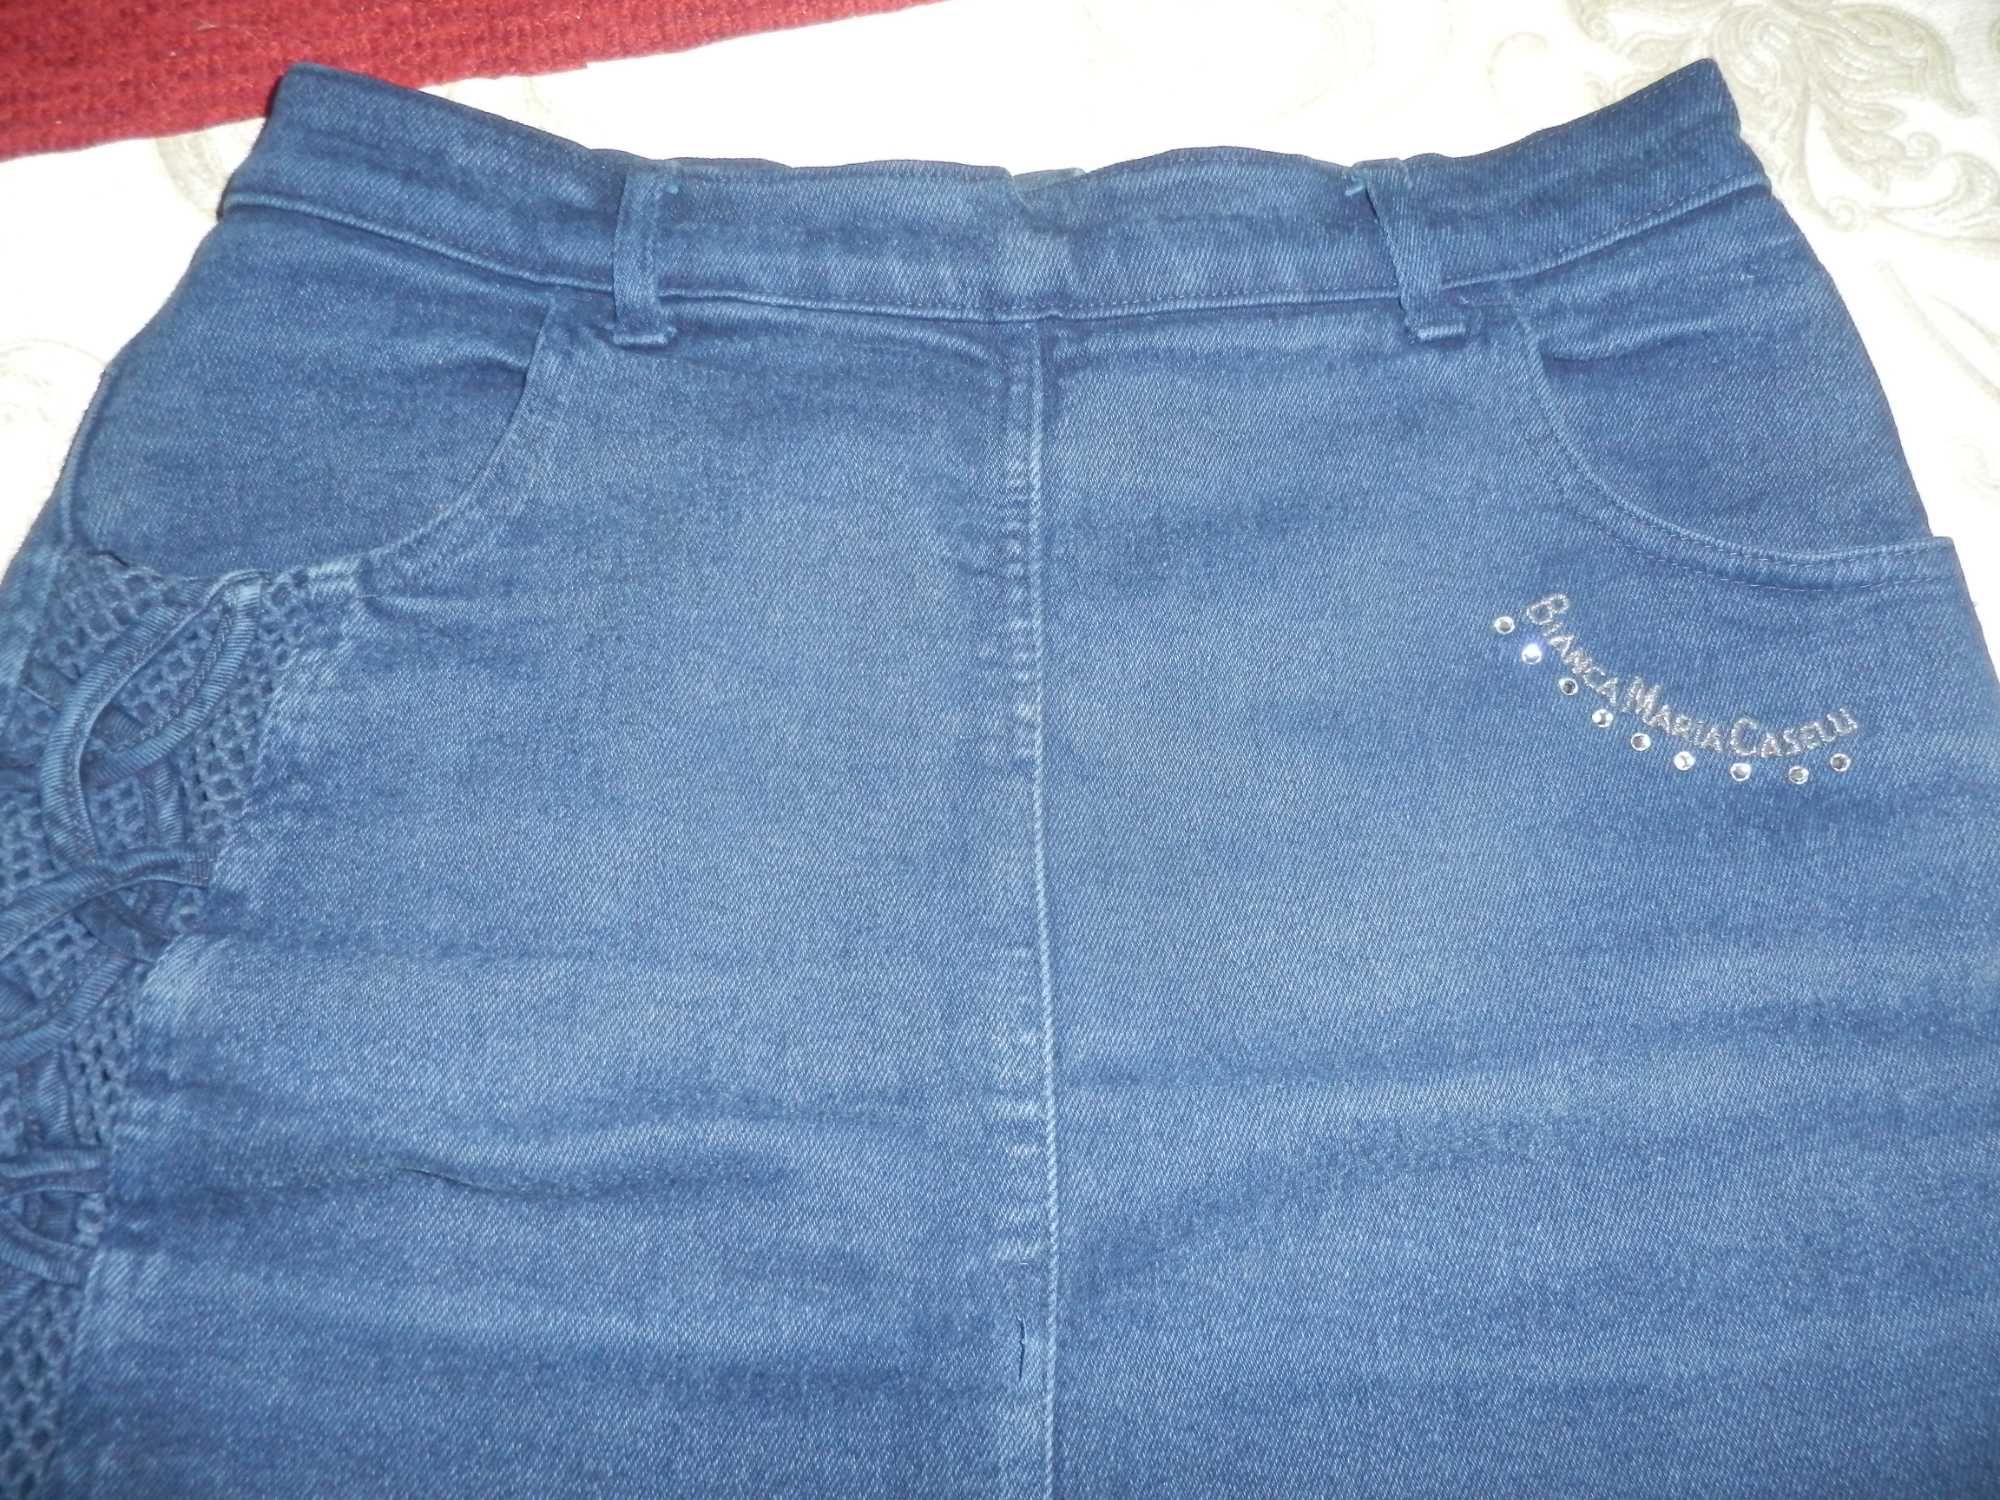 джинсовые юбка,рубашка Bianka Maria Caselli.Италия